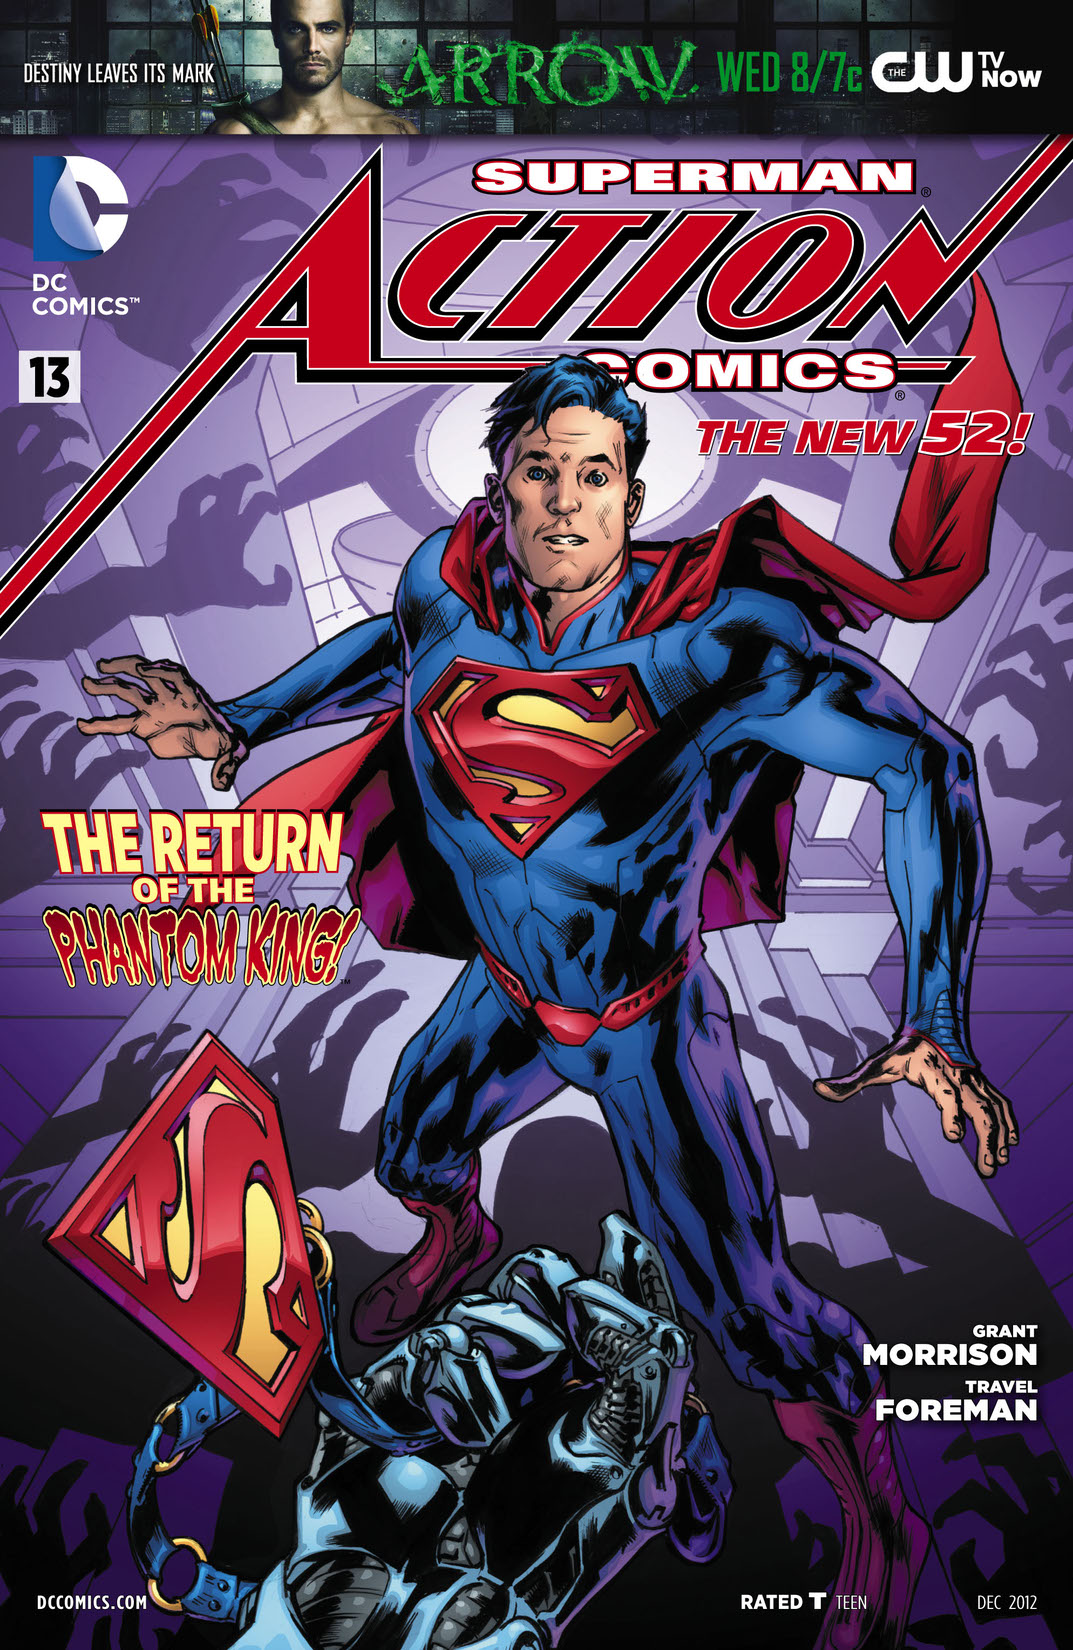 Action Comics (2011-) #13 preview images